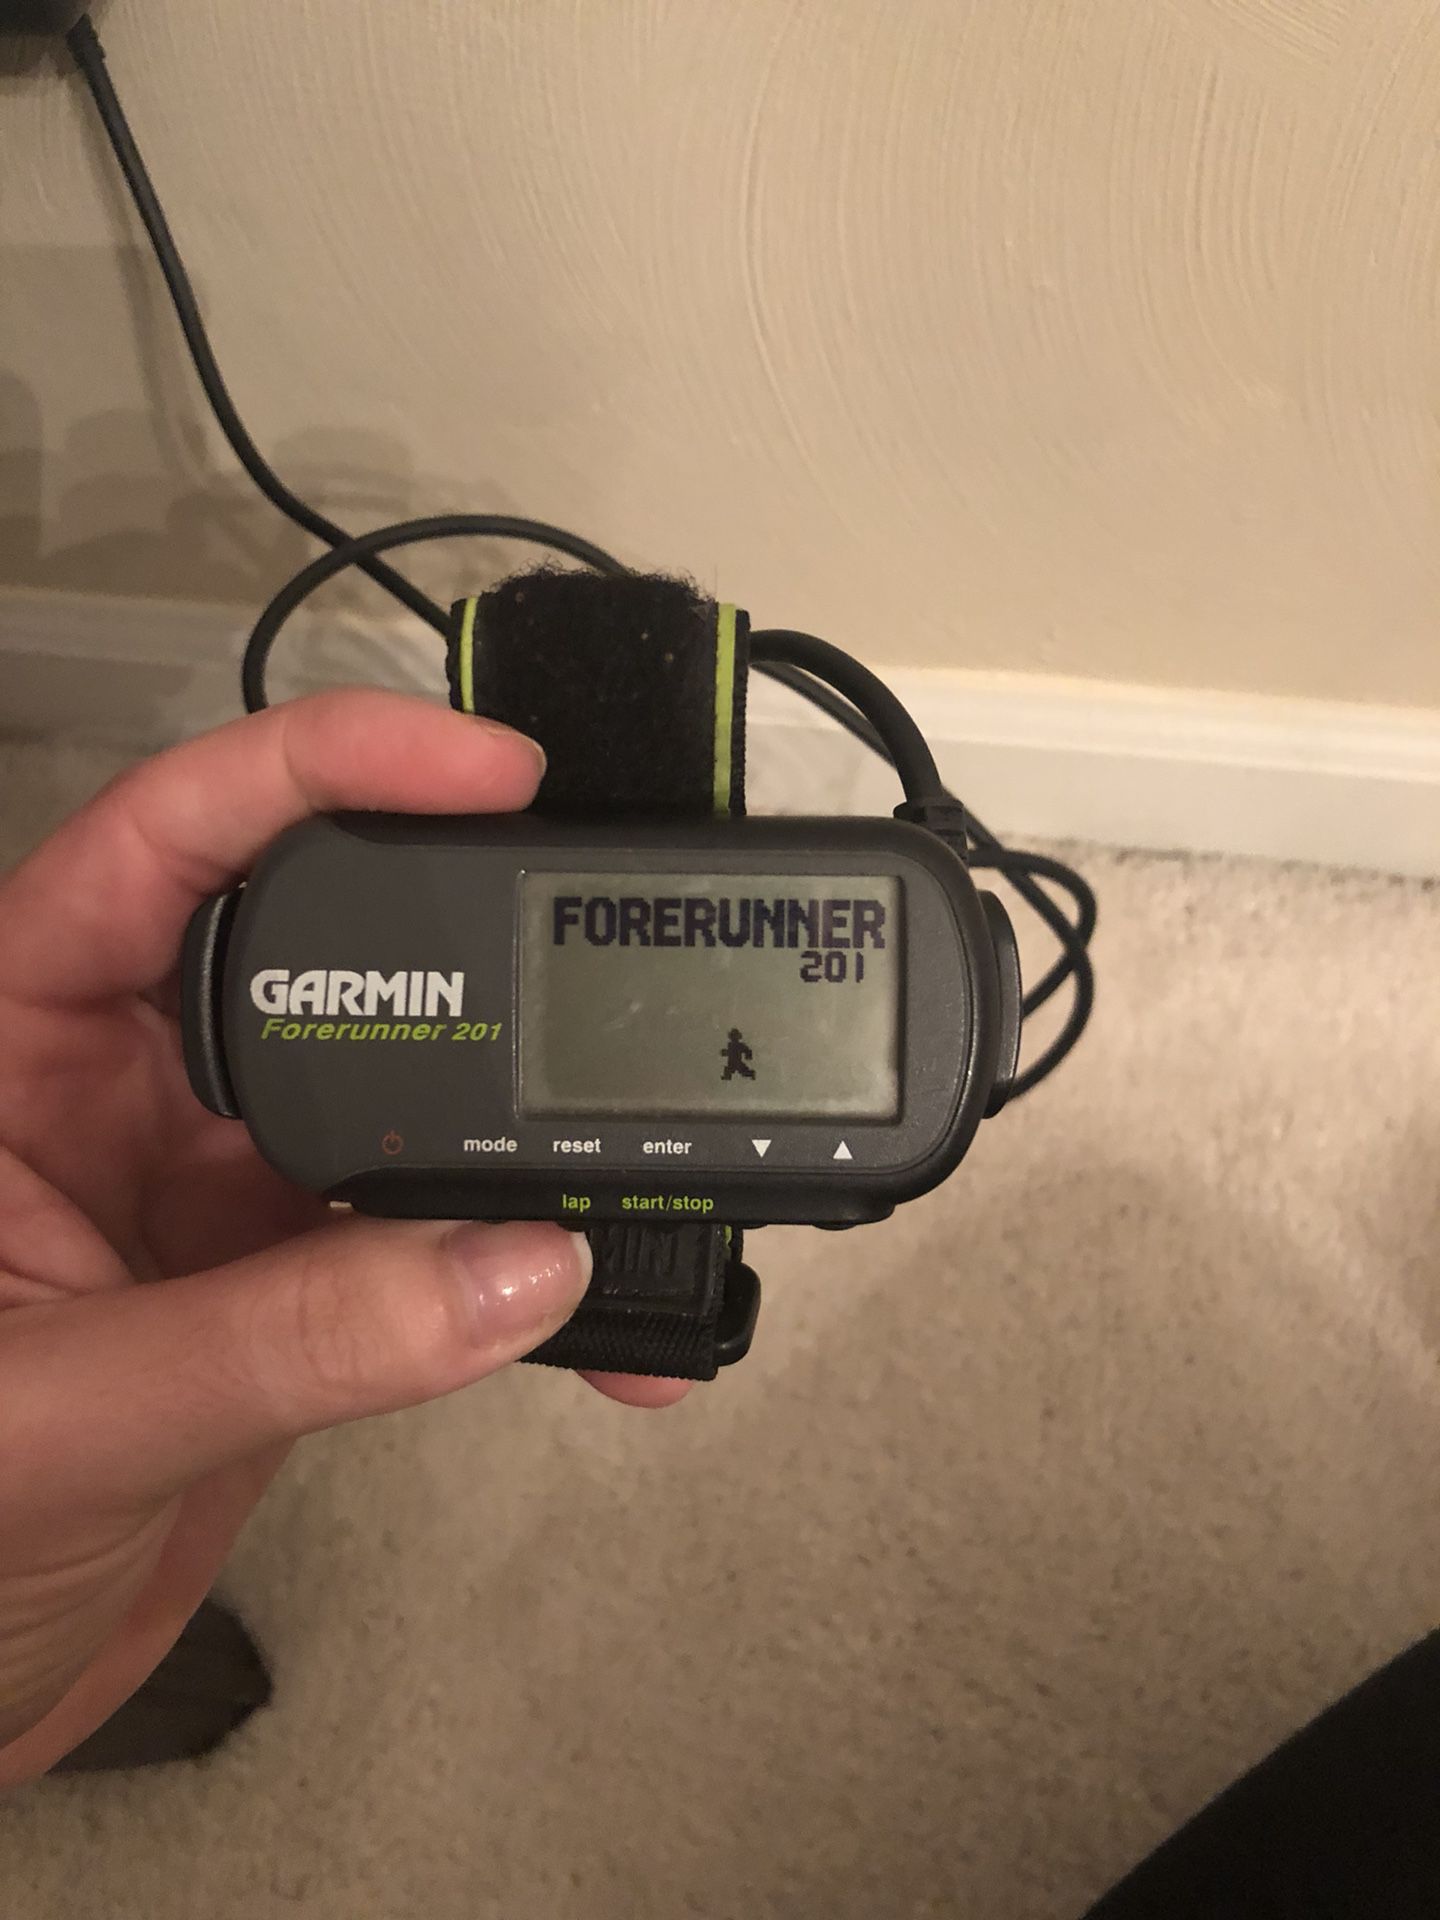 Garmin forerunner 201 charger for Sale Chesapeake, VA - OfferUp